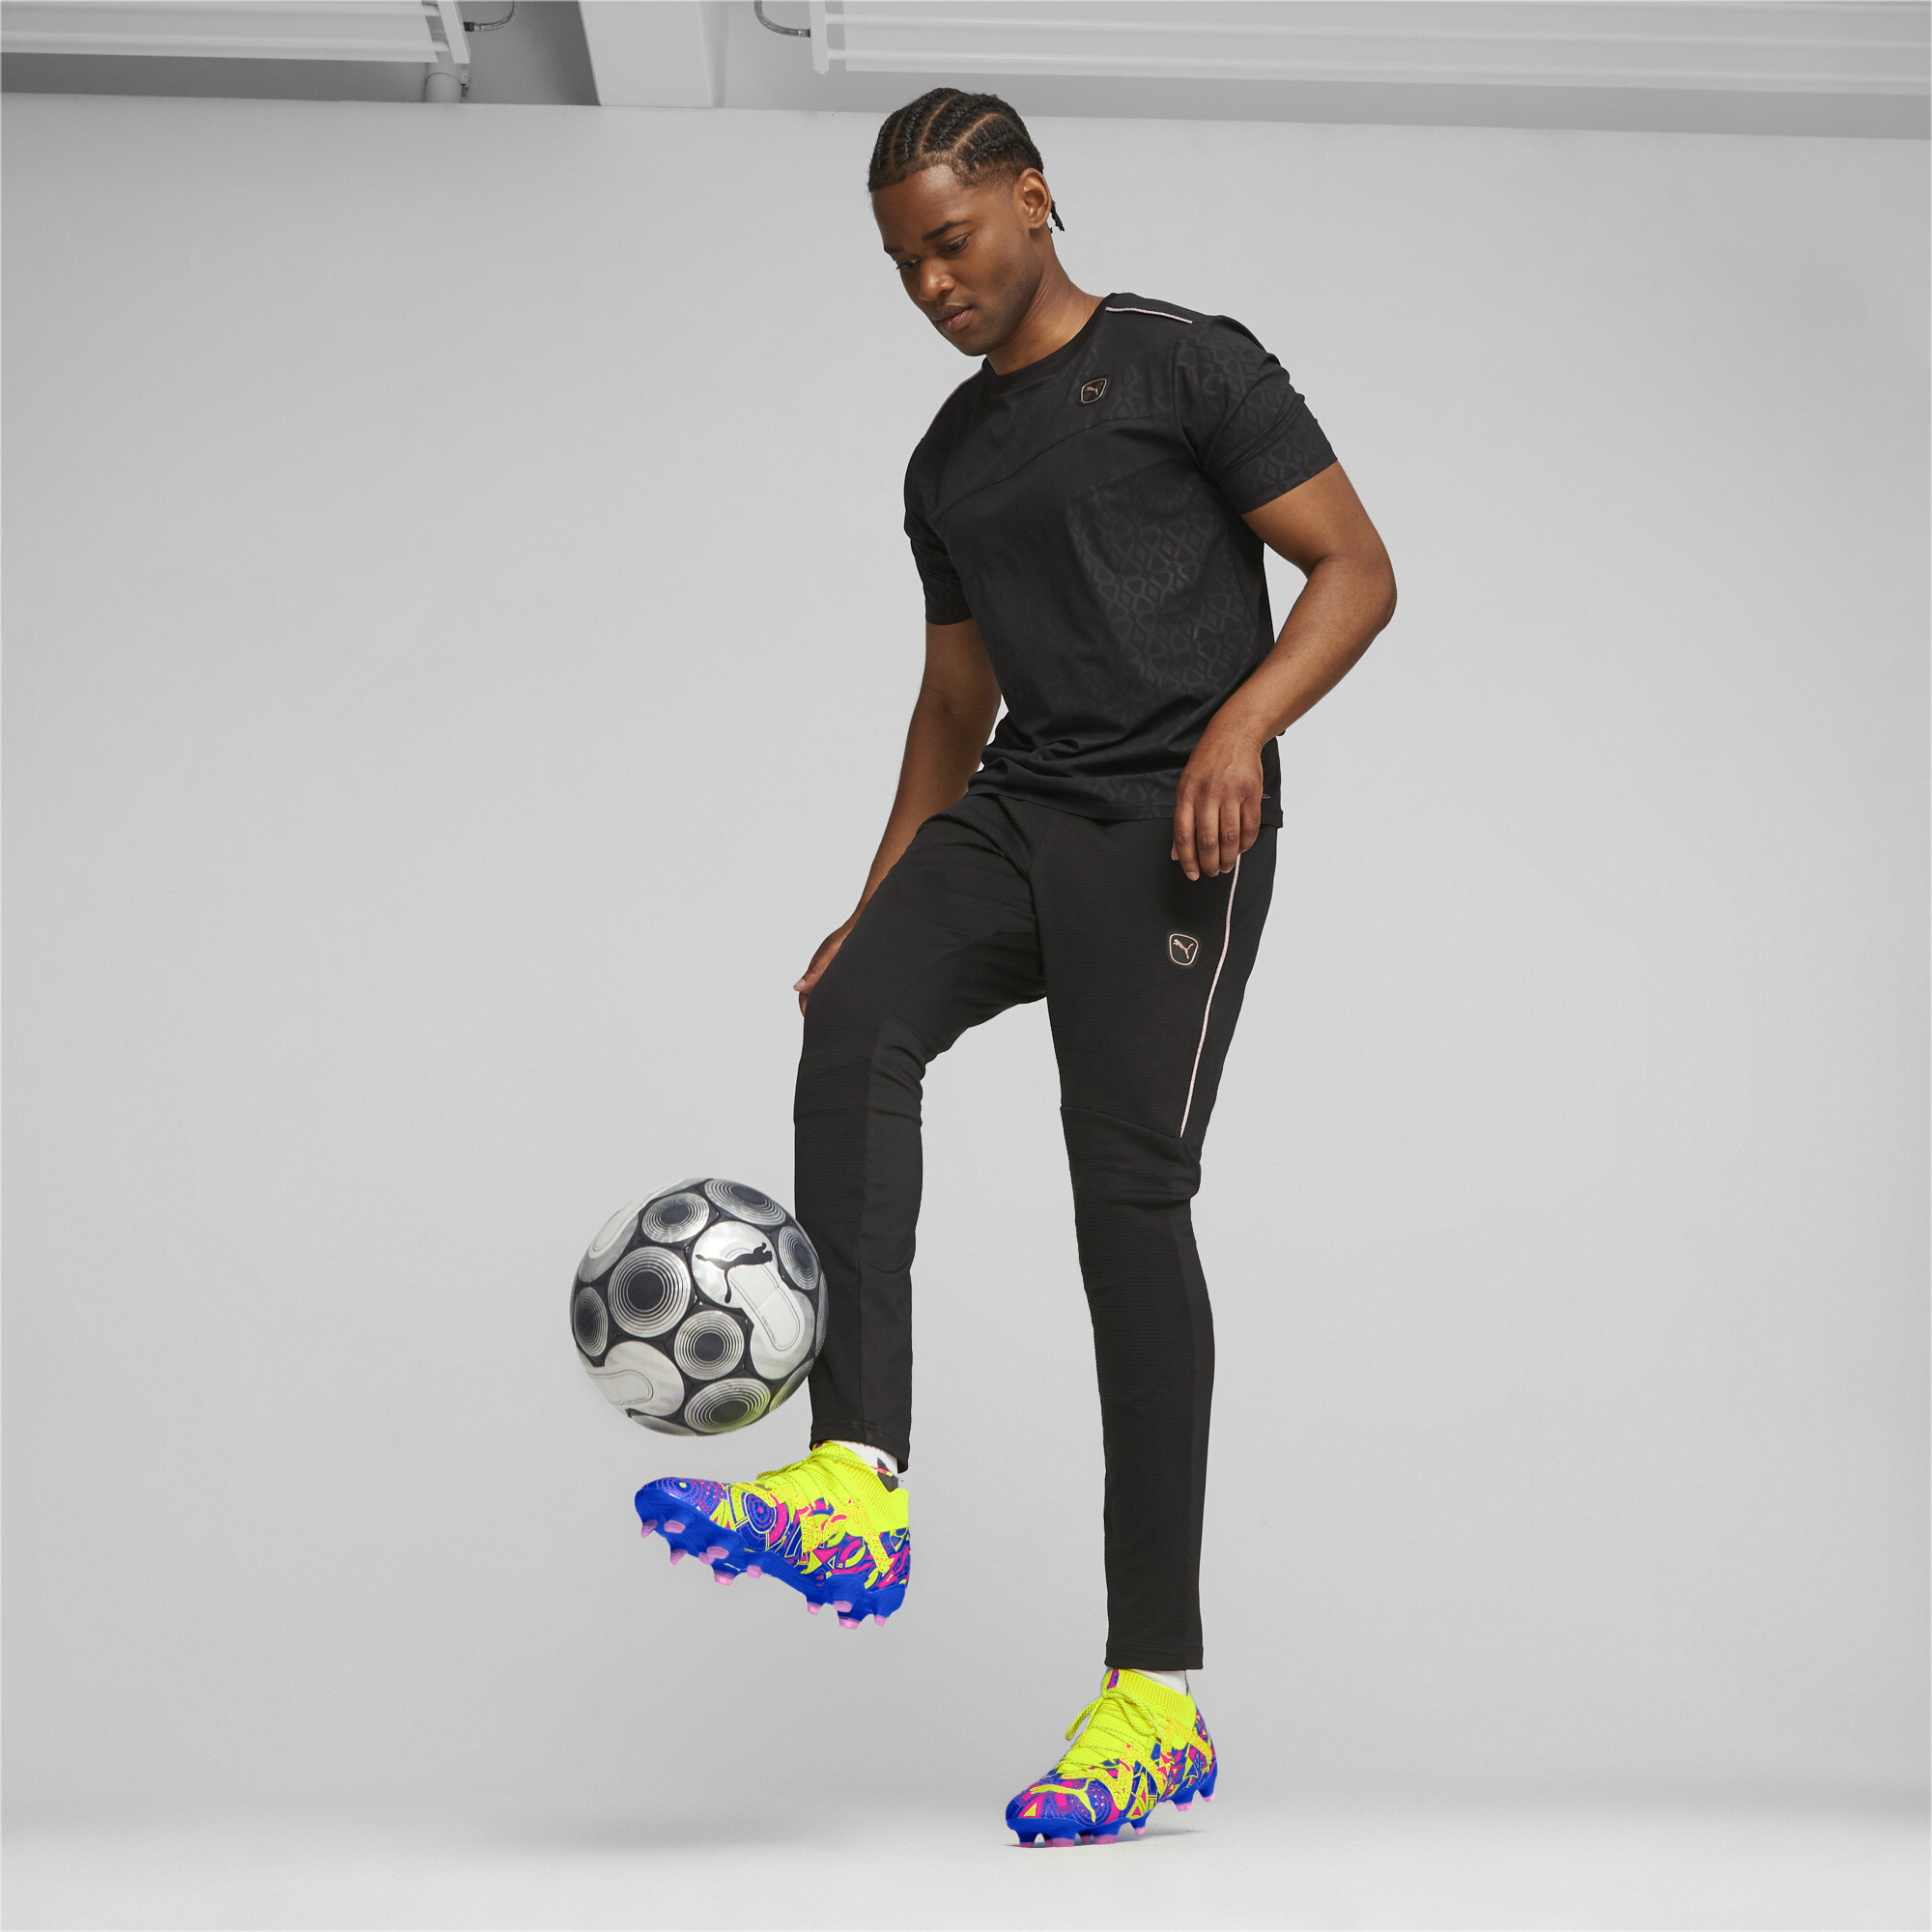 Men's Puma FUTURE ULTIMATE ENERGY FG/AG Football Boots, Blue, Size 38, Shoes